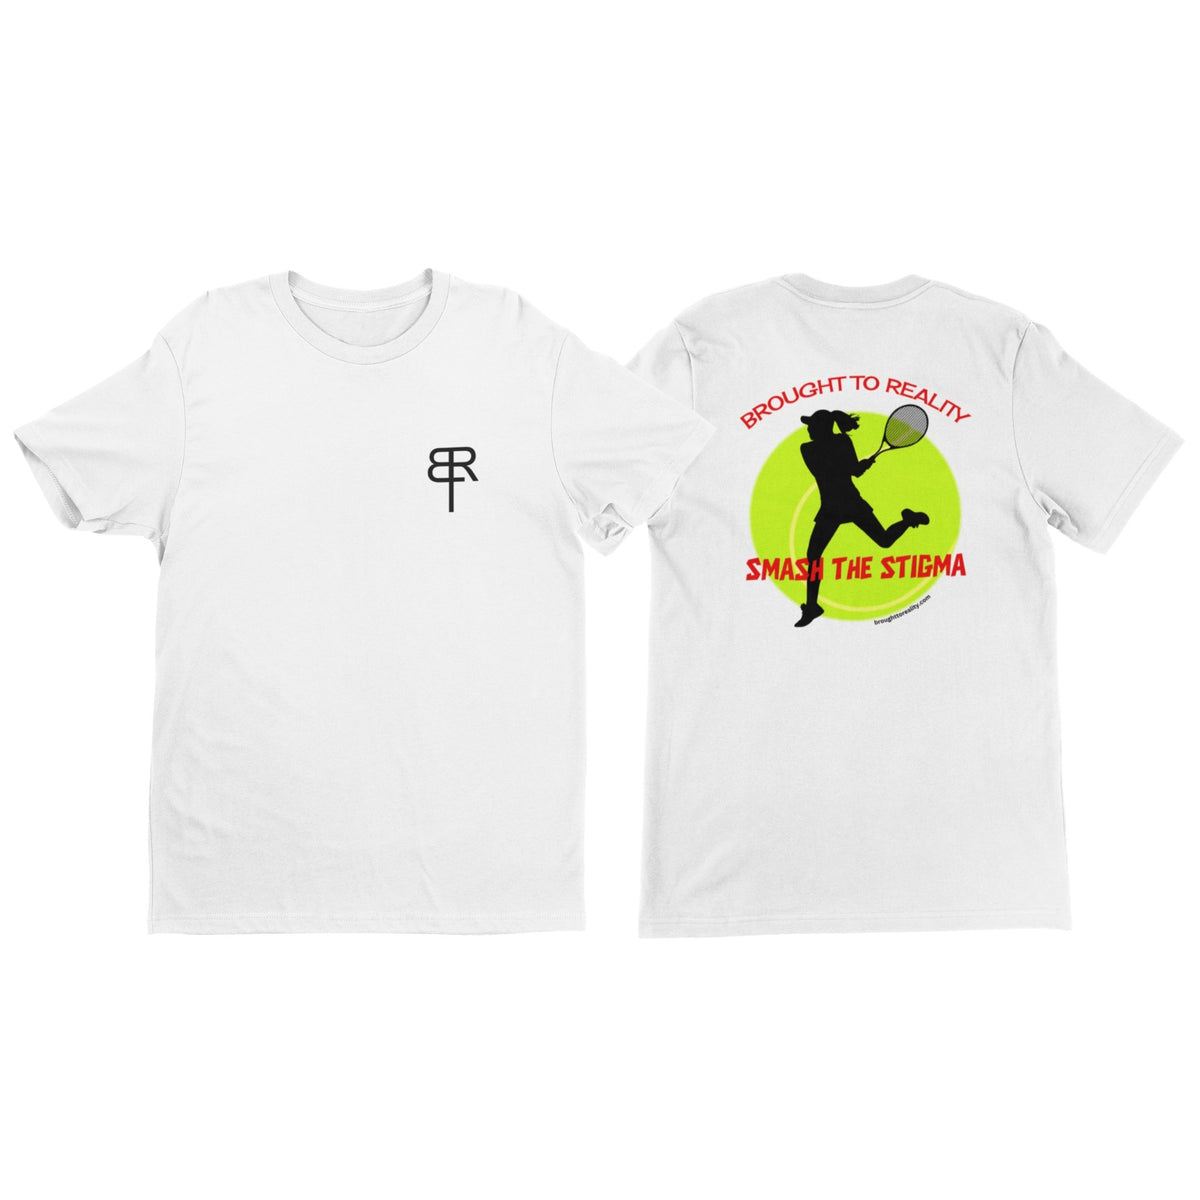 Smash the Stigma Tennis T Shirt - Brought To Reality